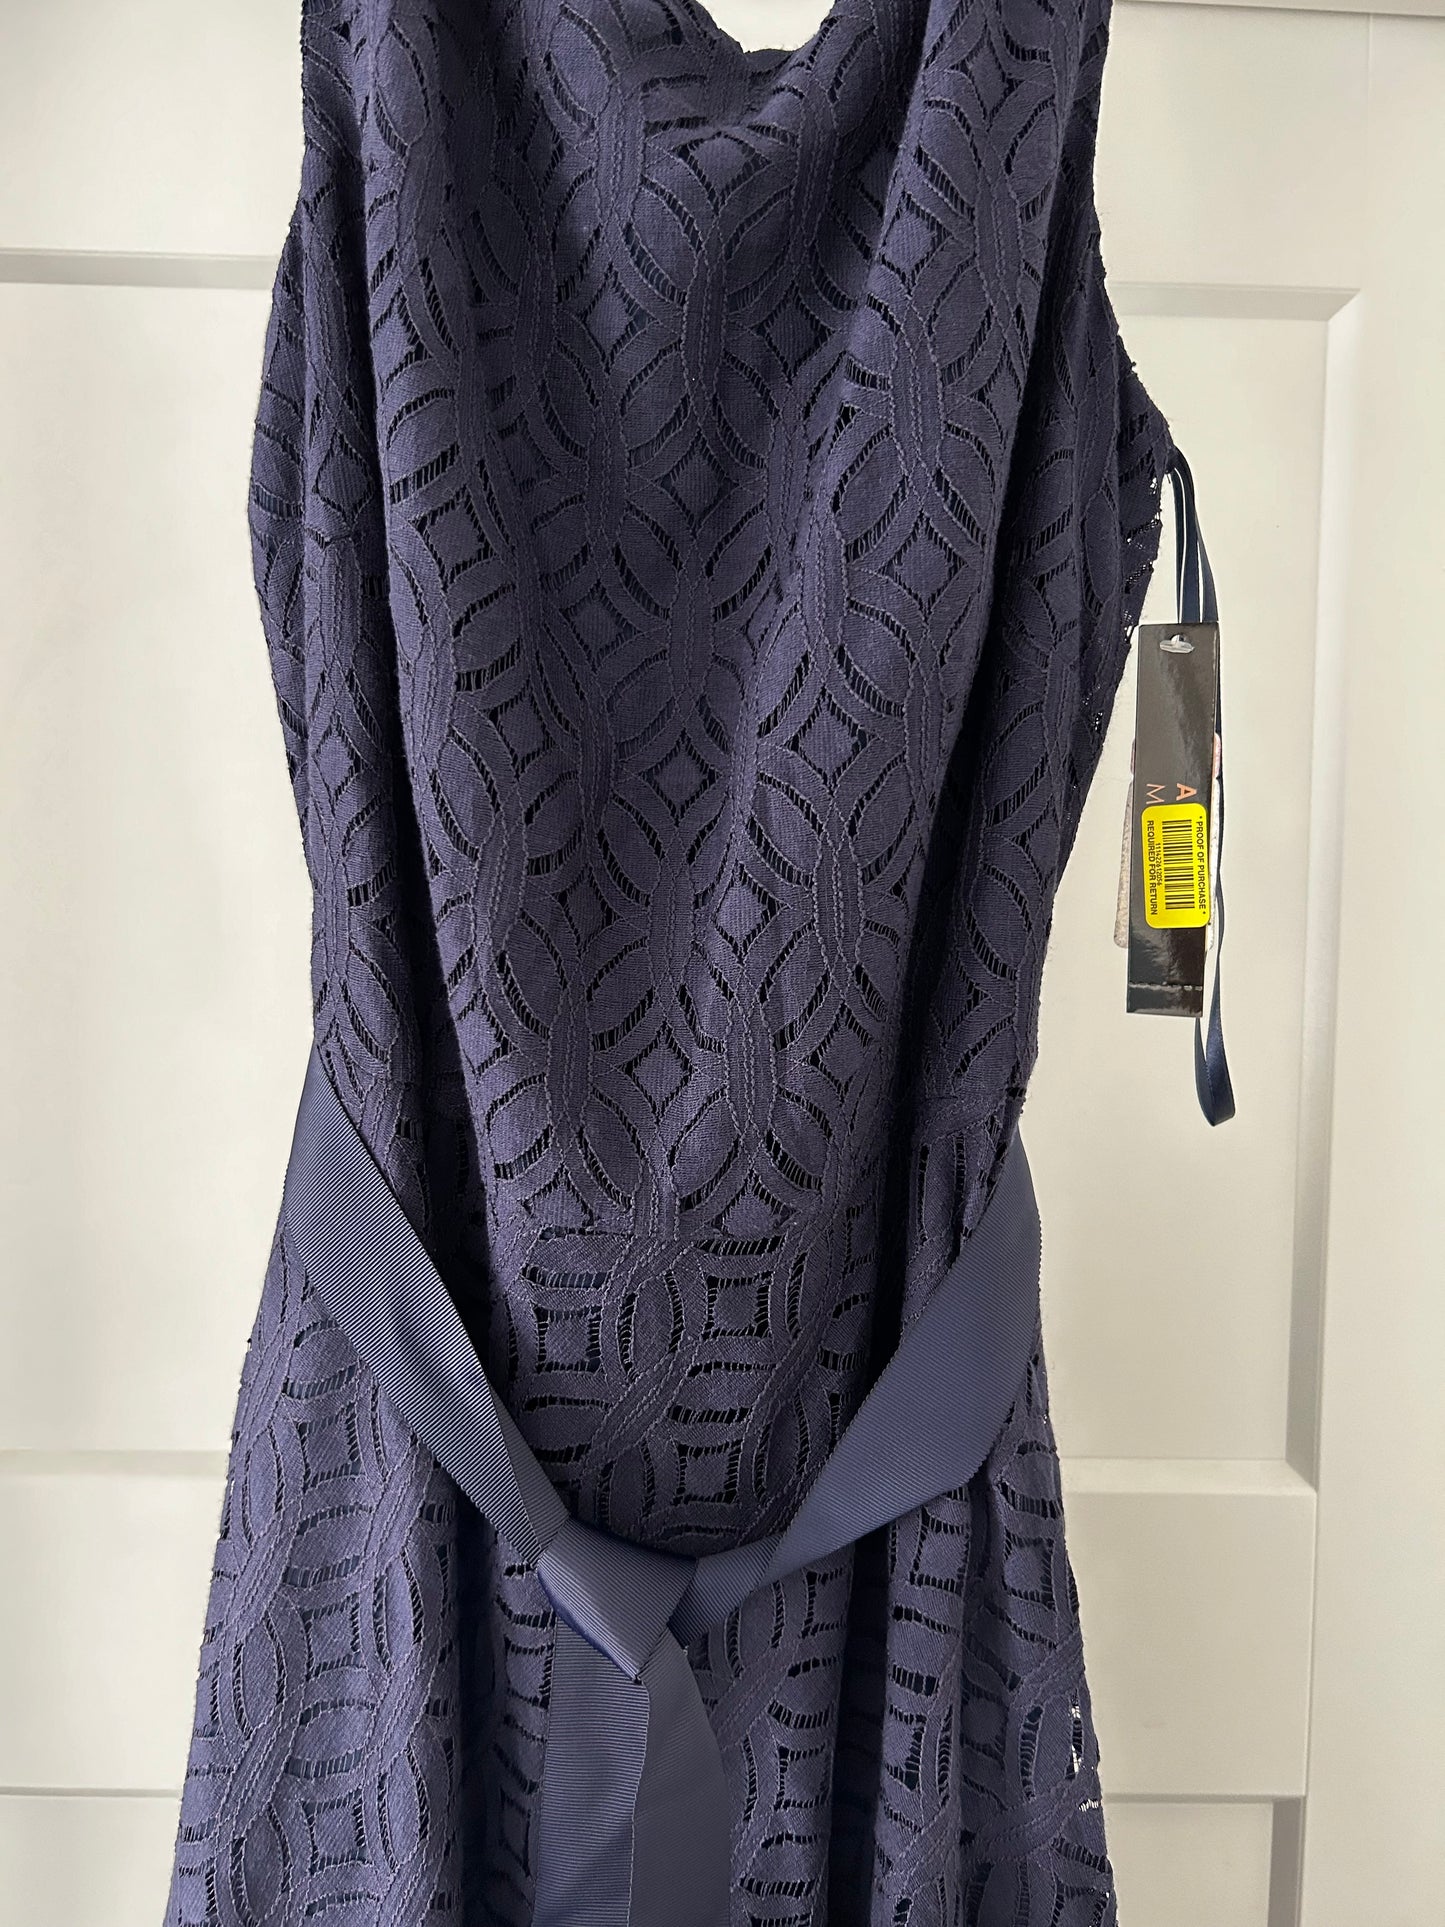 NWT Size 12 Women's Navy Lace Dress - Alex Marie